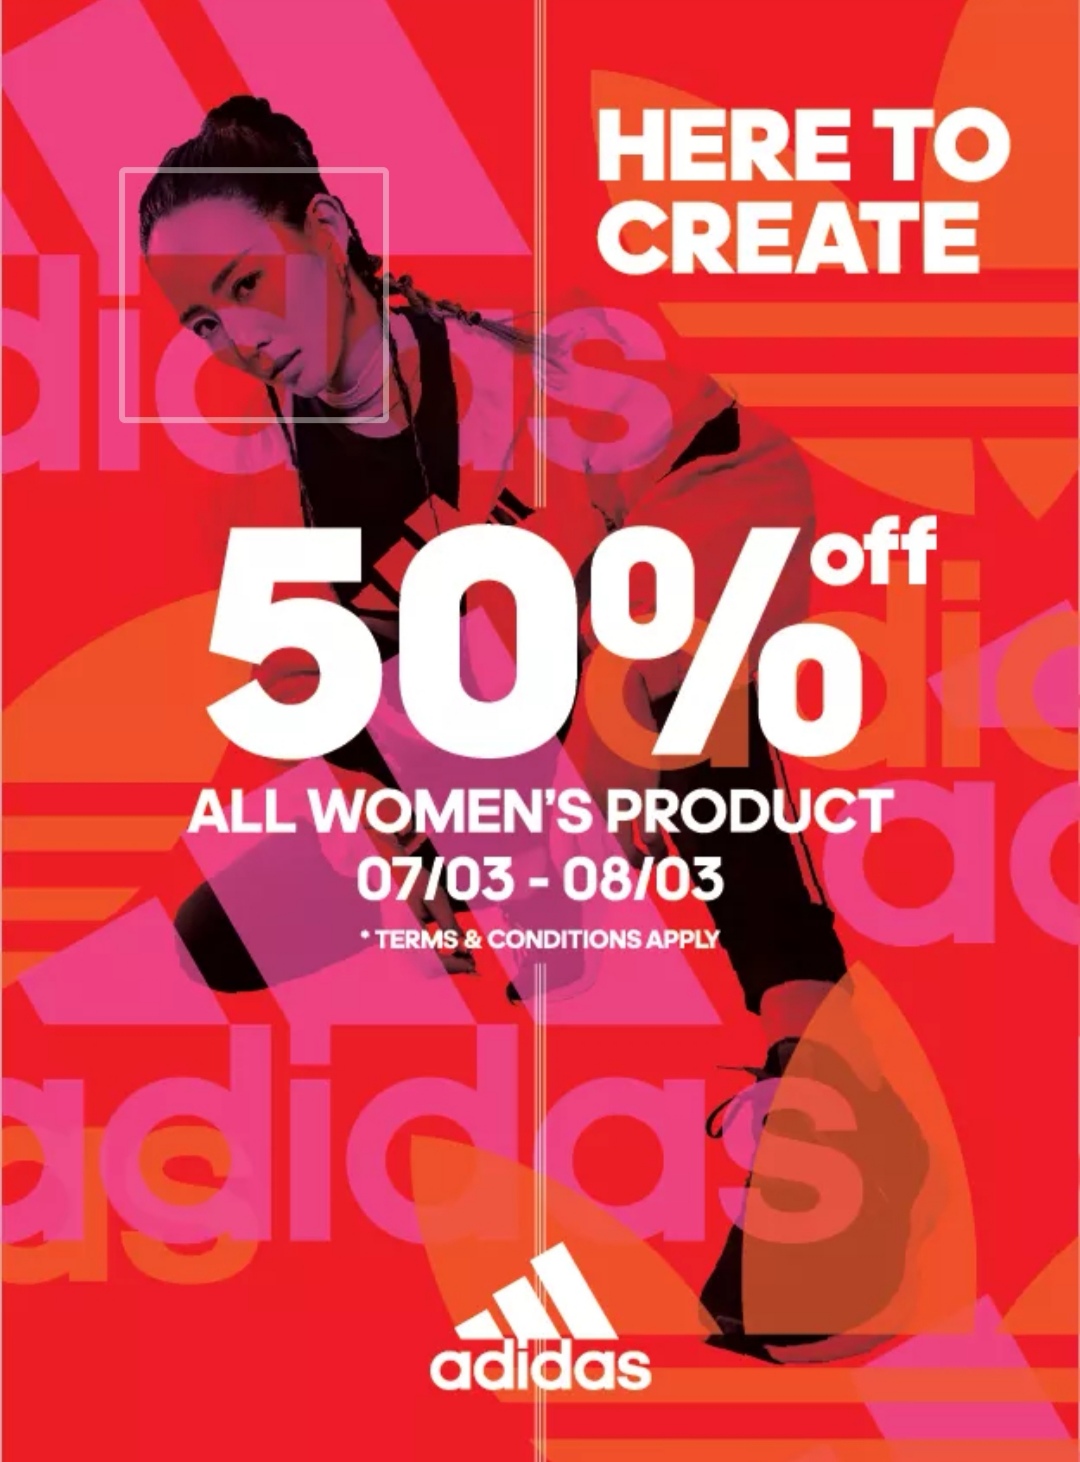 Remisión Carne de cordero Sophie 7-8 Mar 2020: Adidas all Women's Product Promotion - SG.EverydayOnSales.com